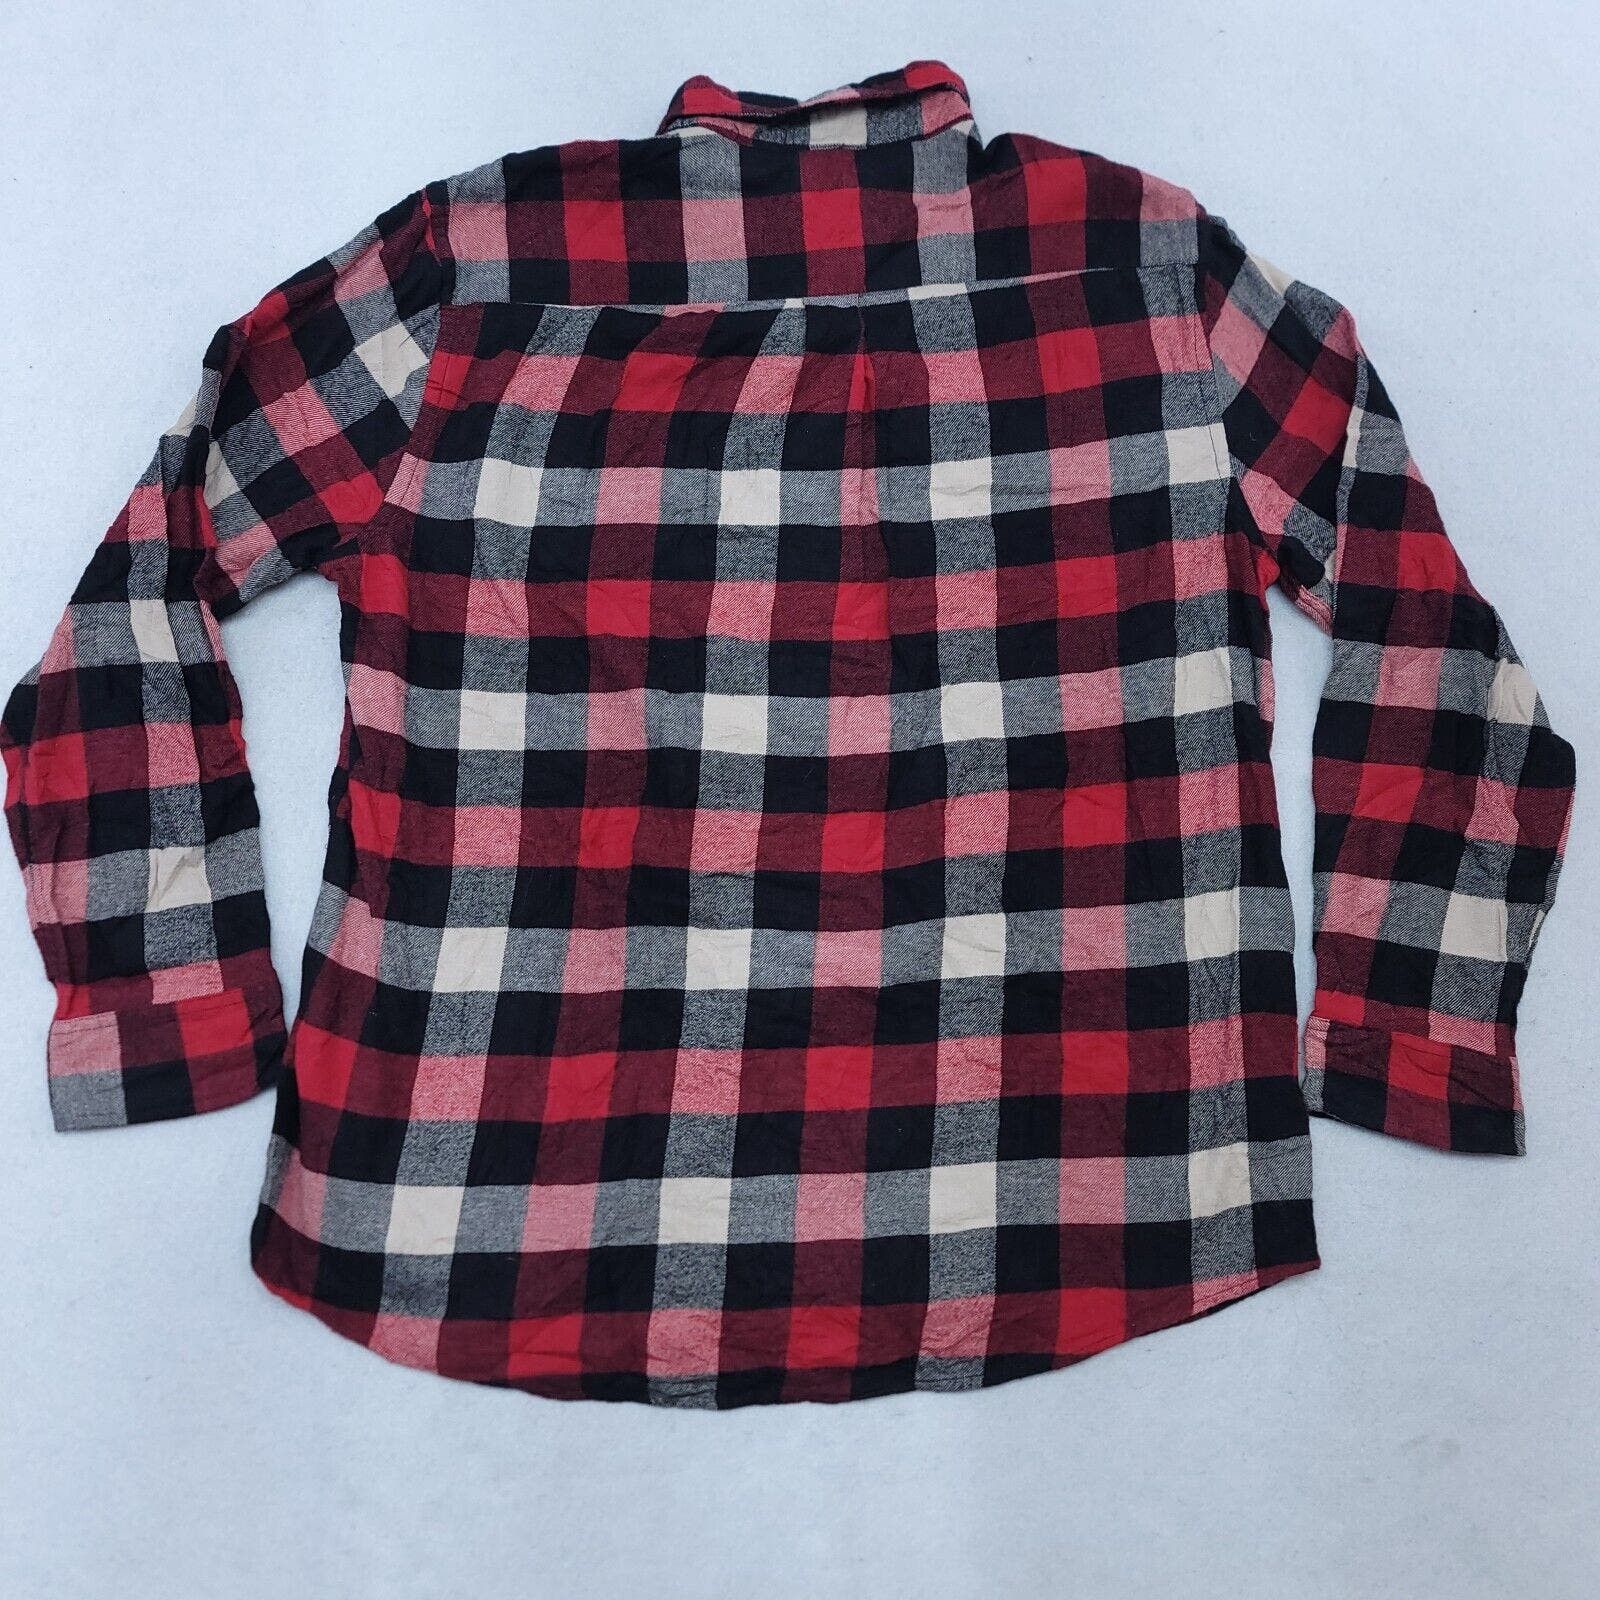 Croft & Barrow Croft & Barrow Buffalo Check Flannel Shirt Mens Size XL Red Size US XL / EU 56 / 4 - 8 Preview